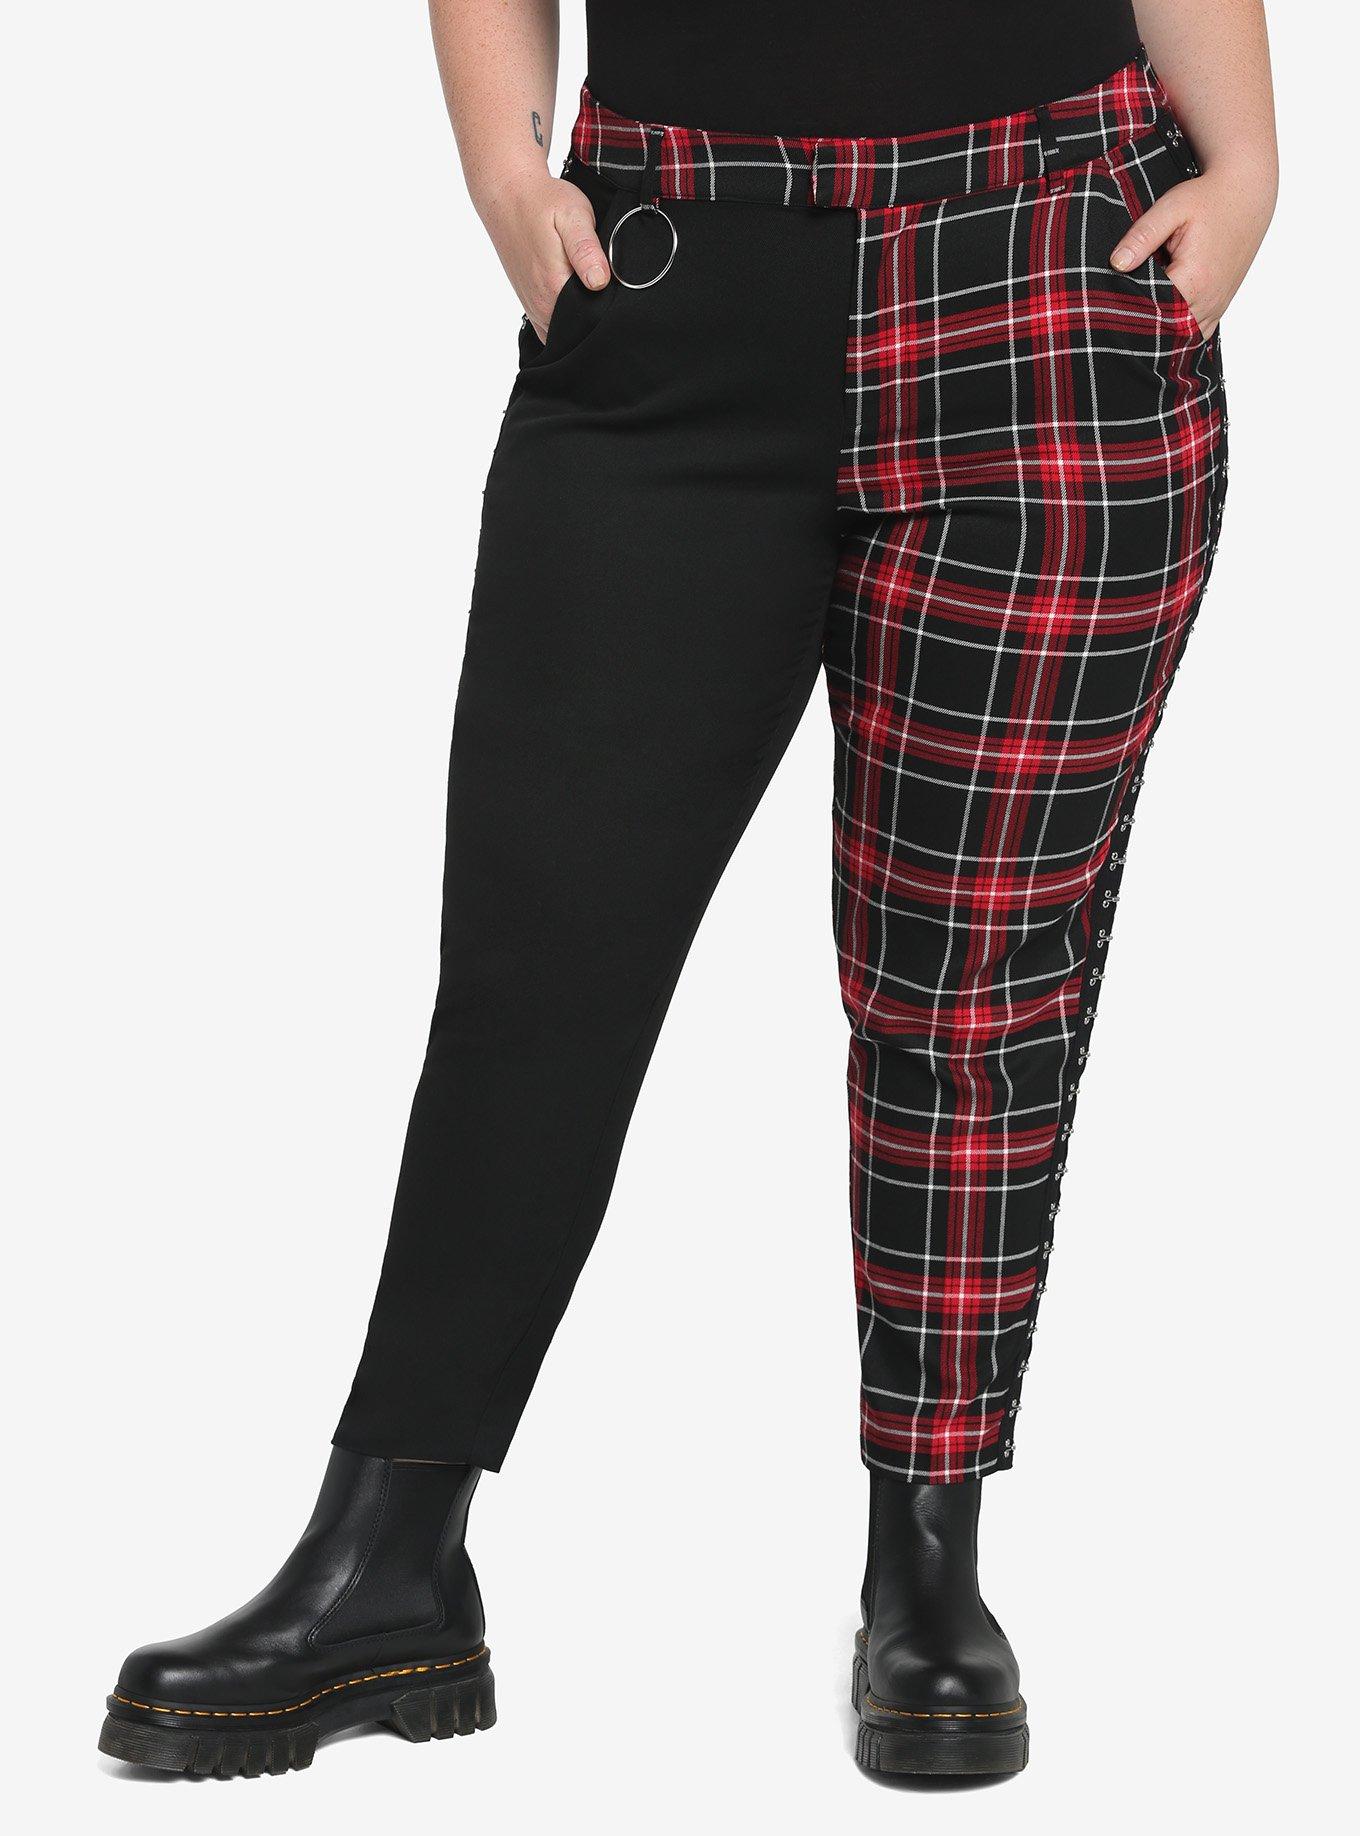 Black & Red Plaid Split Pants Plus Size